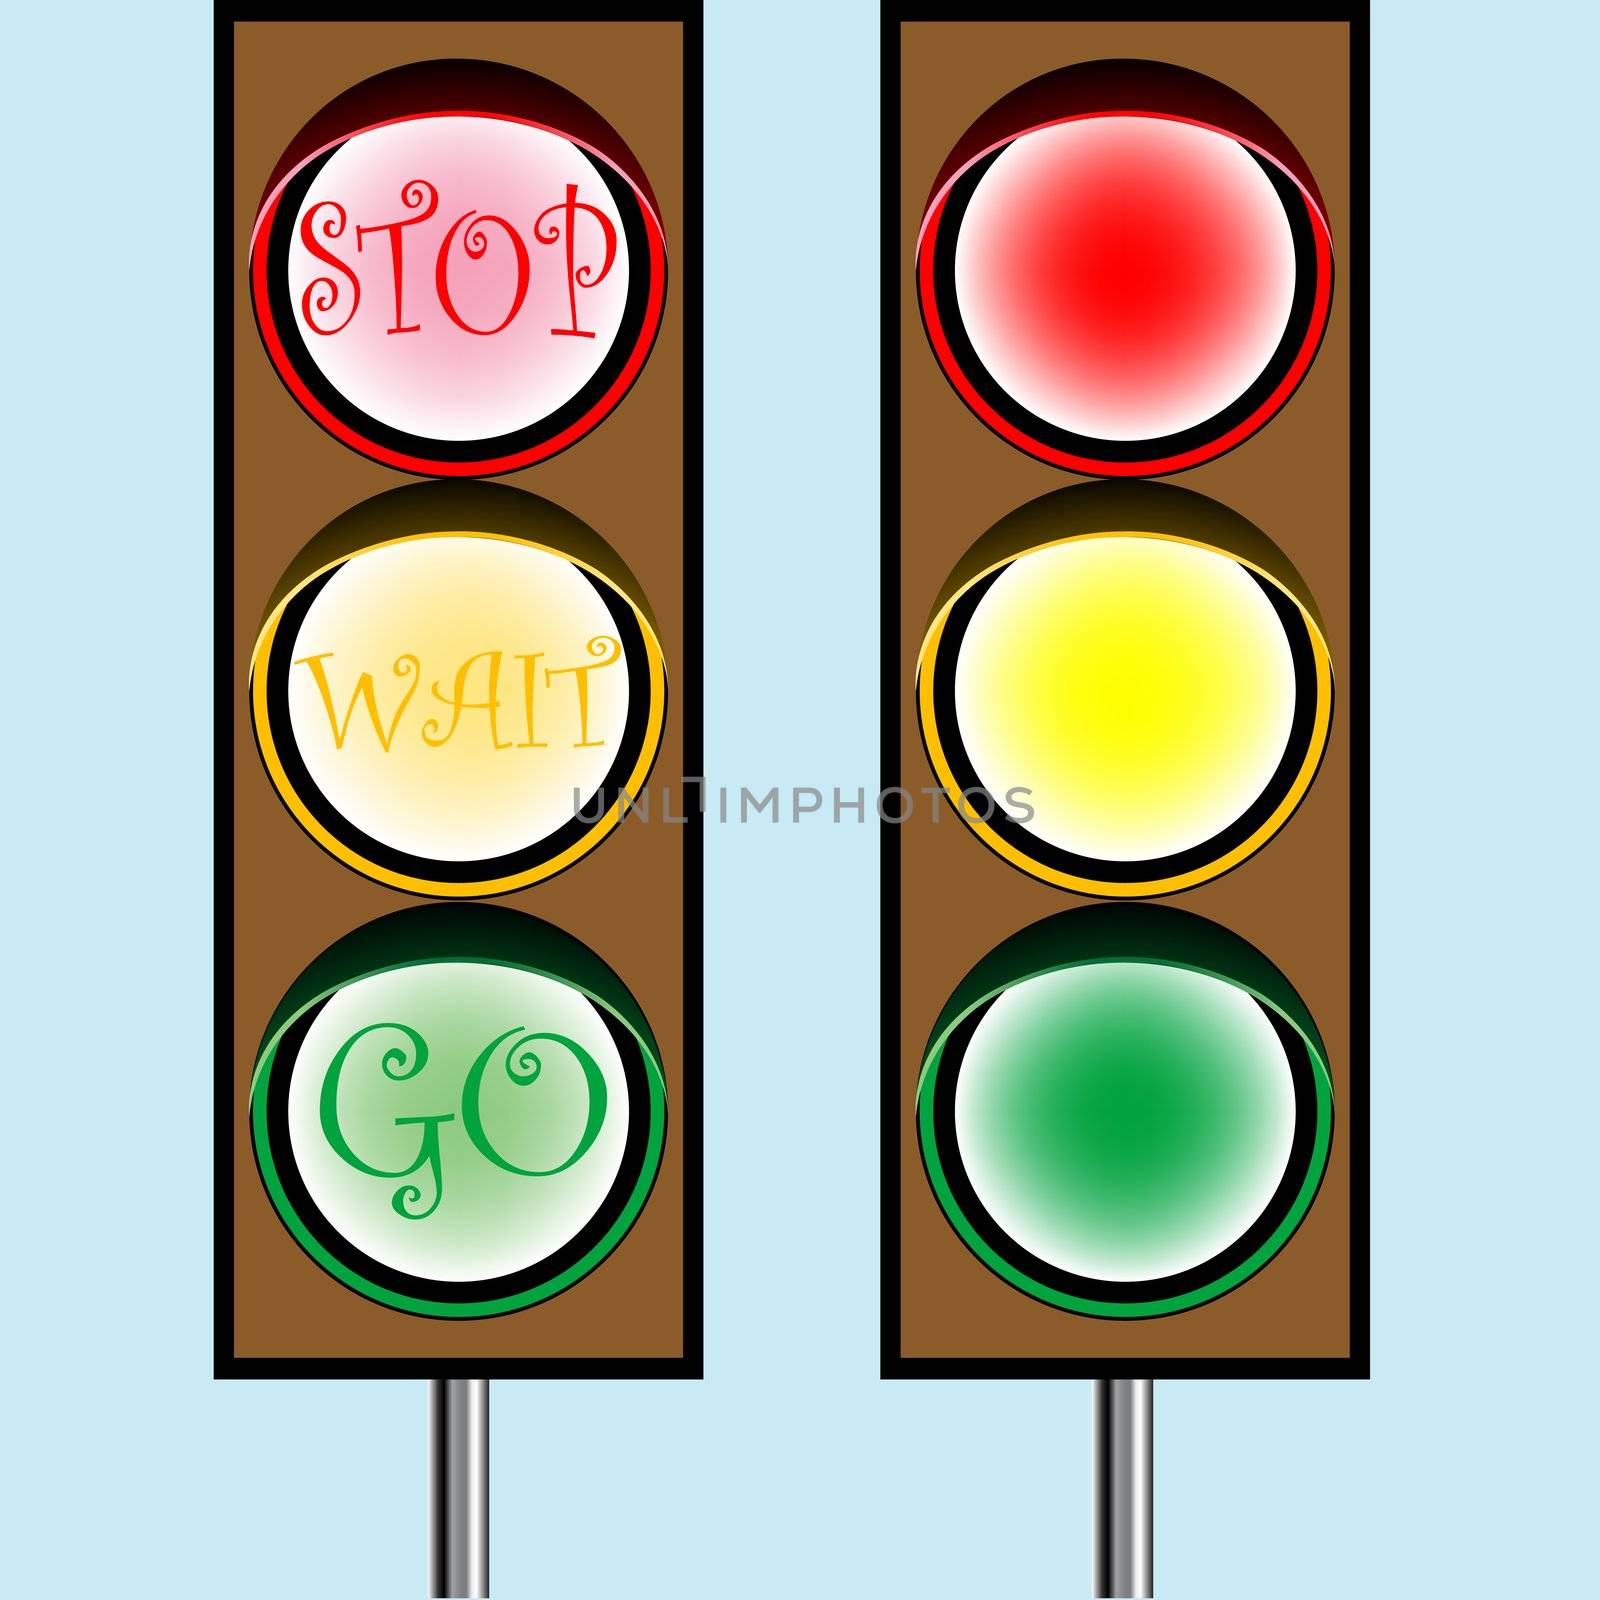 traffic lights by robertosch